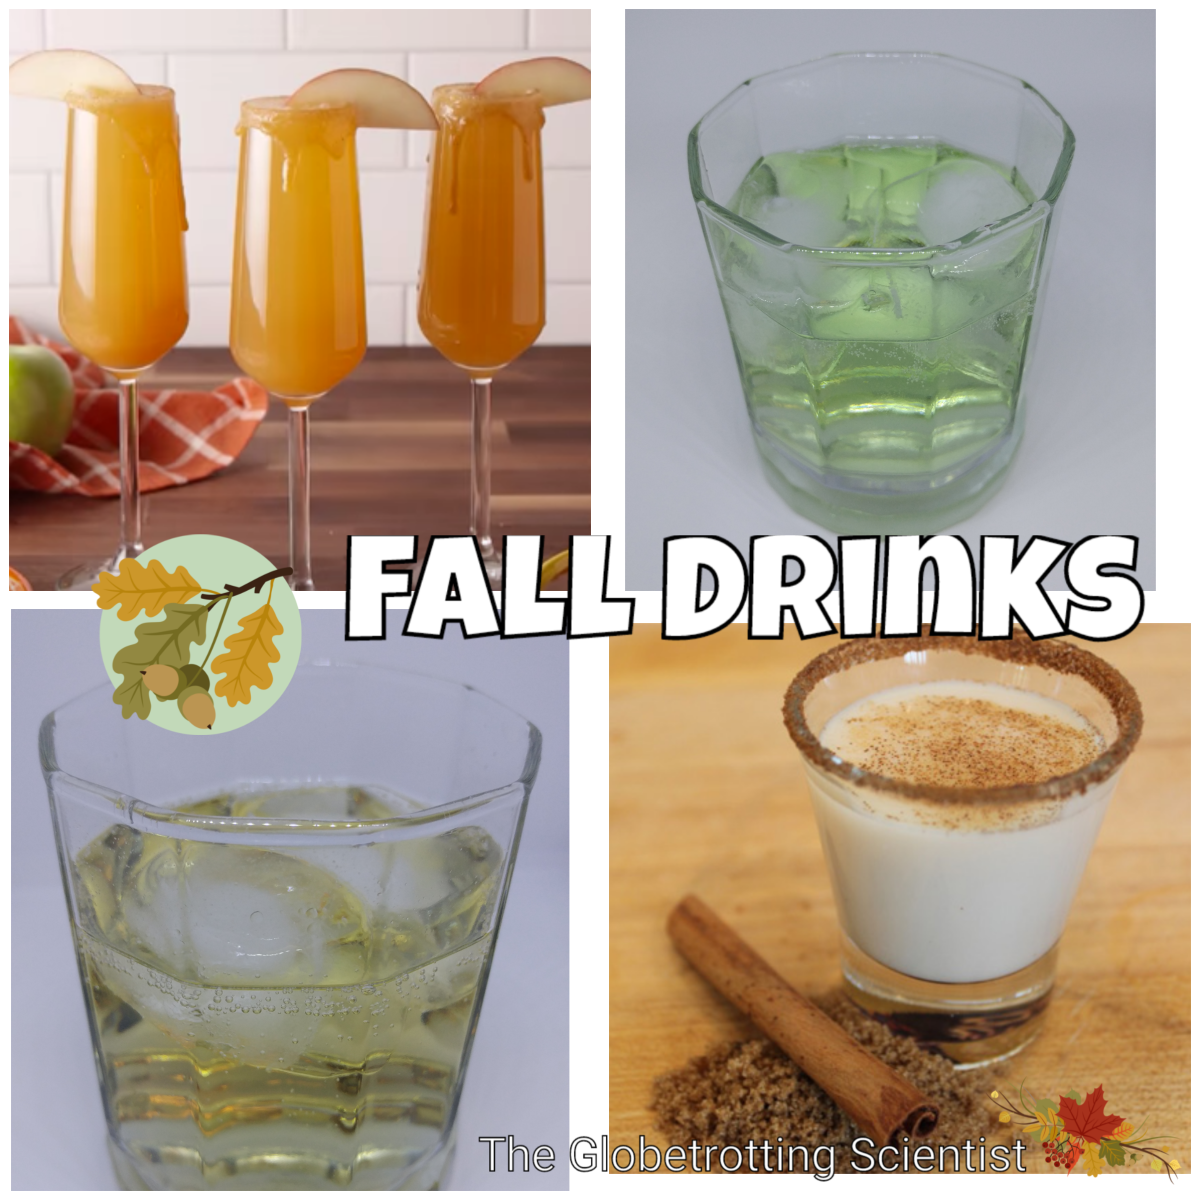 Fall drinks